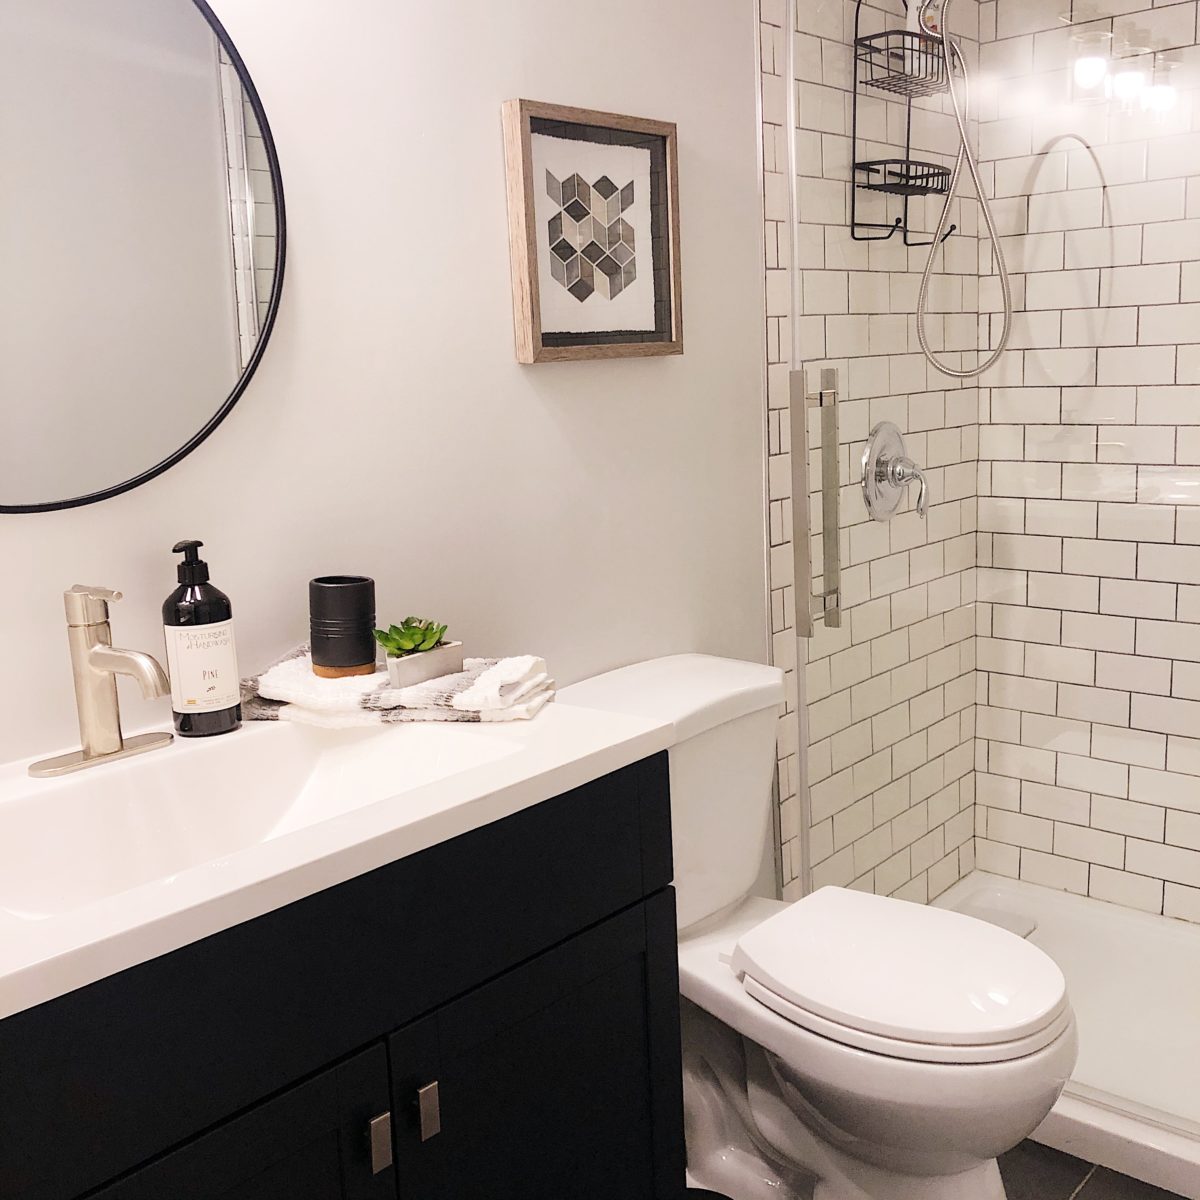 Basement Bathroom Renovation Reveal And Life Update